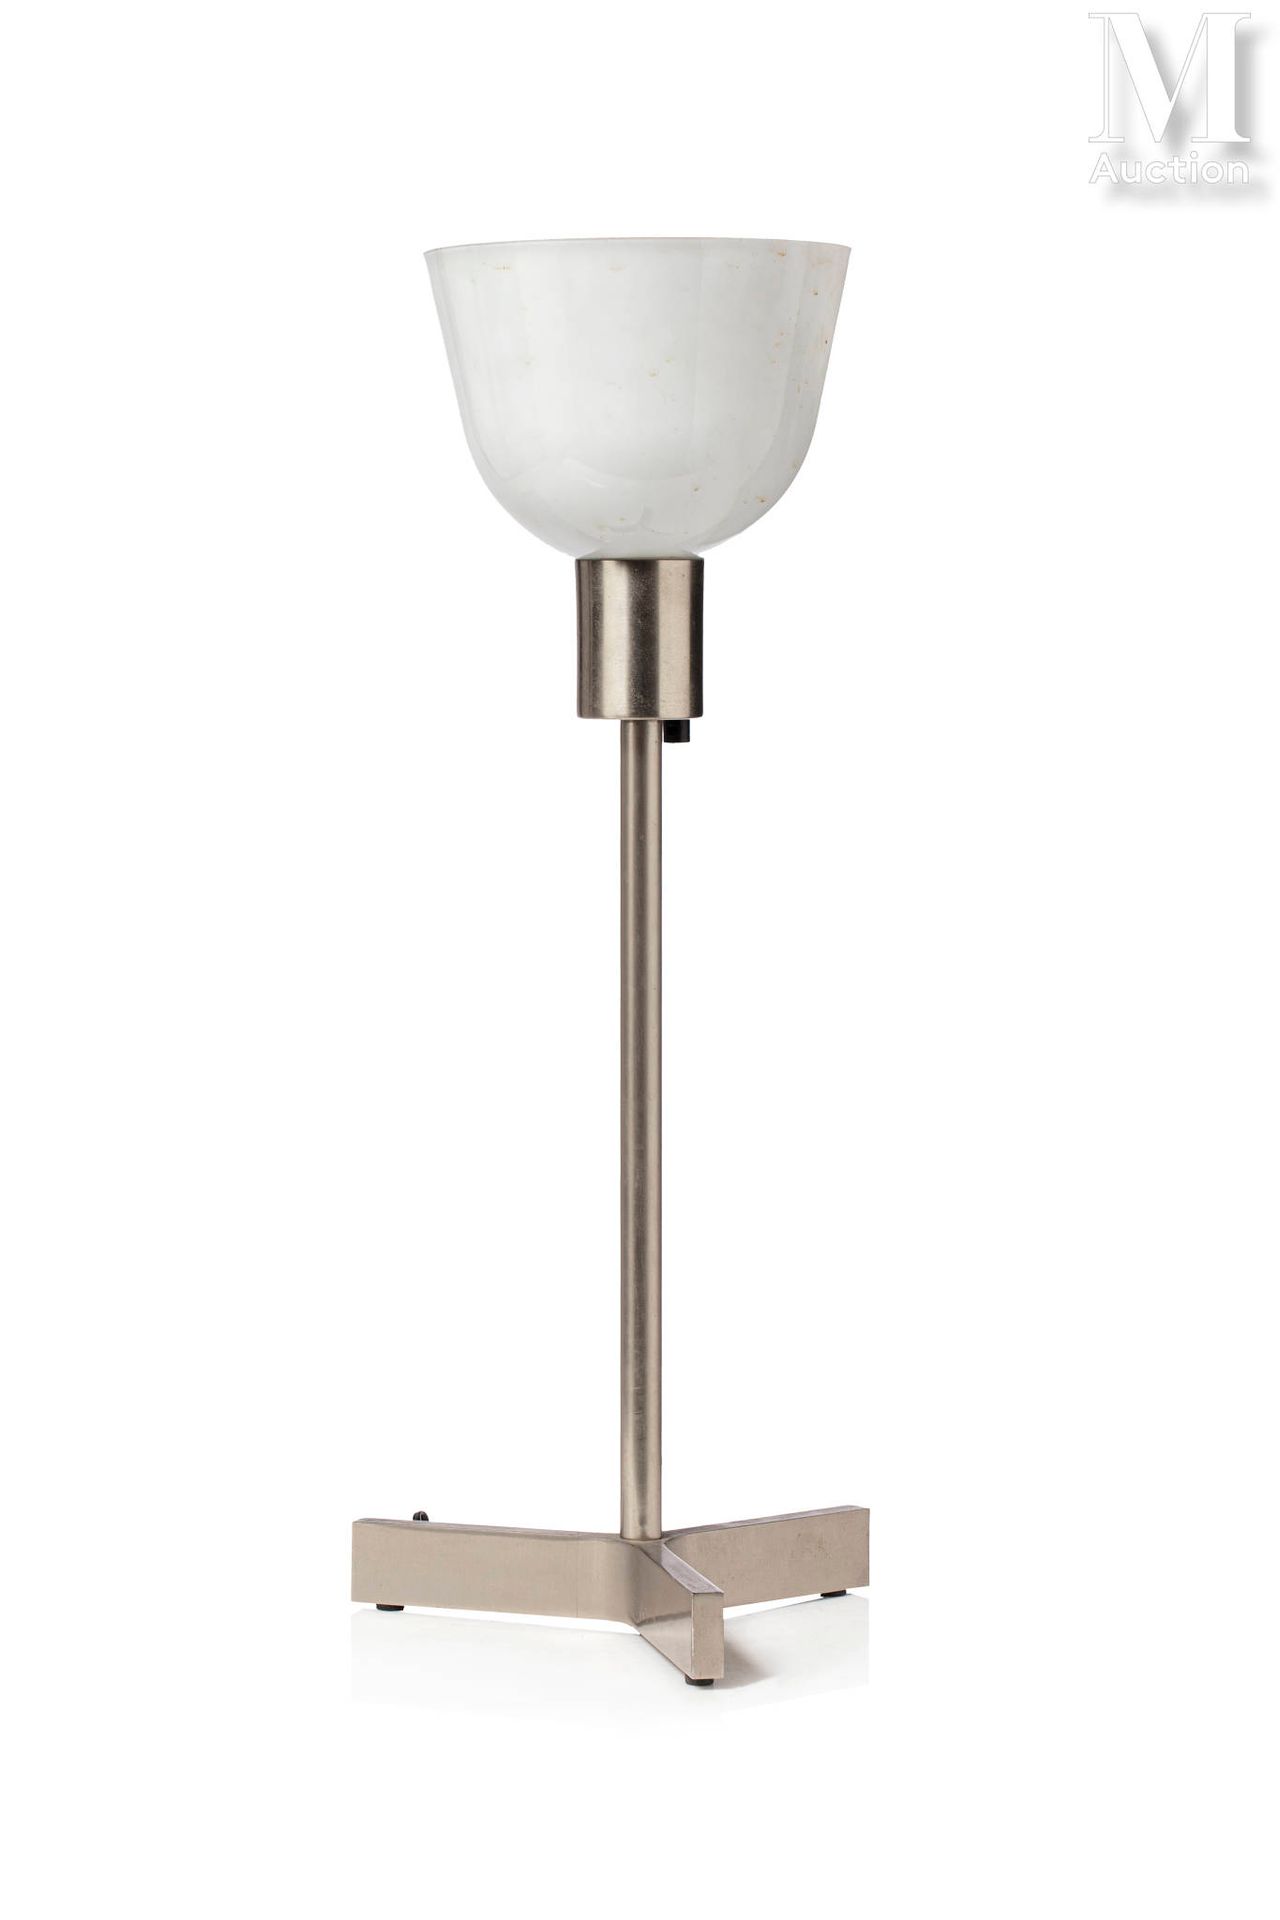 Null Roger FATUS (XIX. Jahrhundert)

"6111"

Lampe aus verchromtem Metall. Tulpe&hellip;